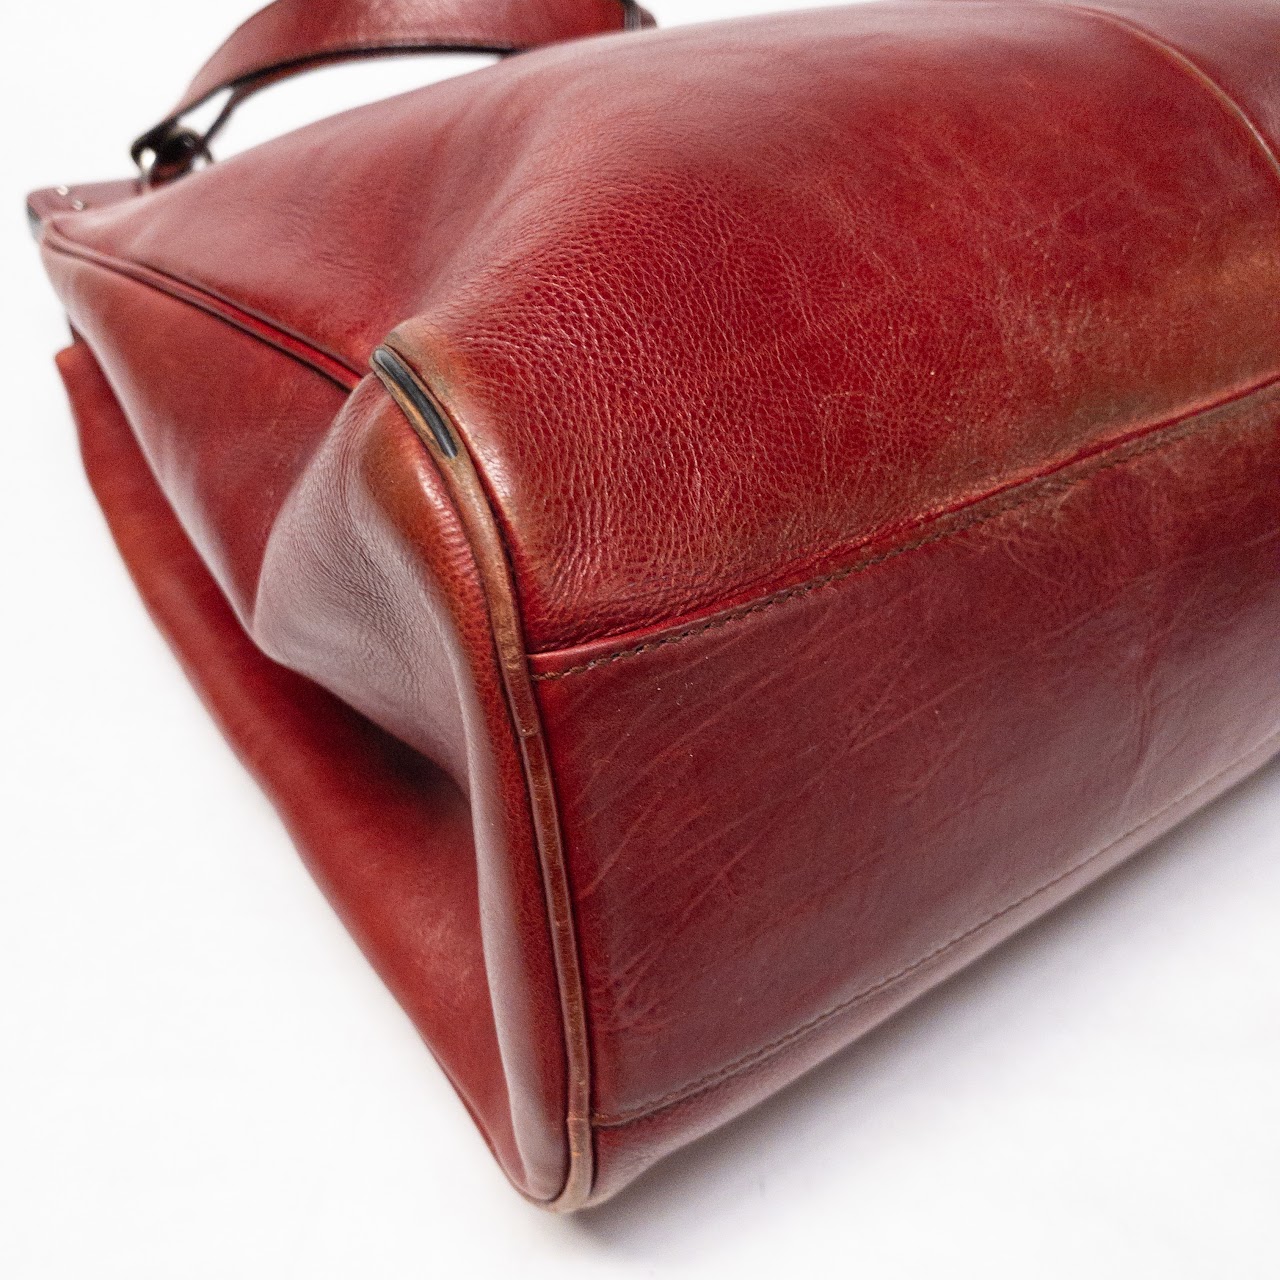 Yves Saint Laurent Rive Gauche Frame Top Handbag